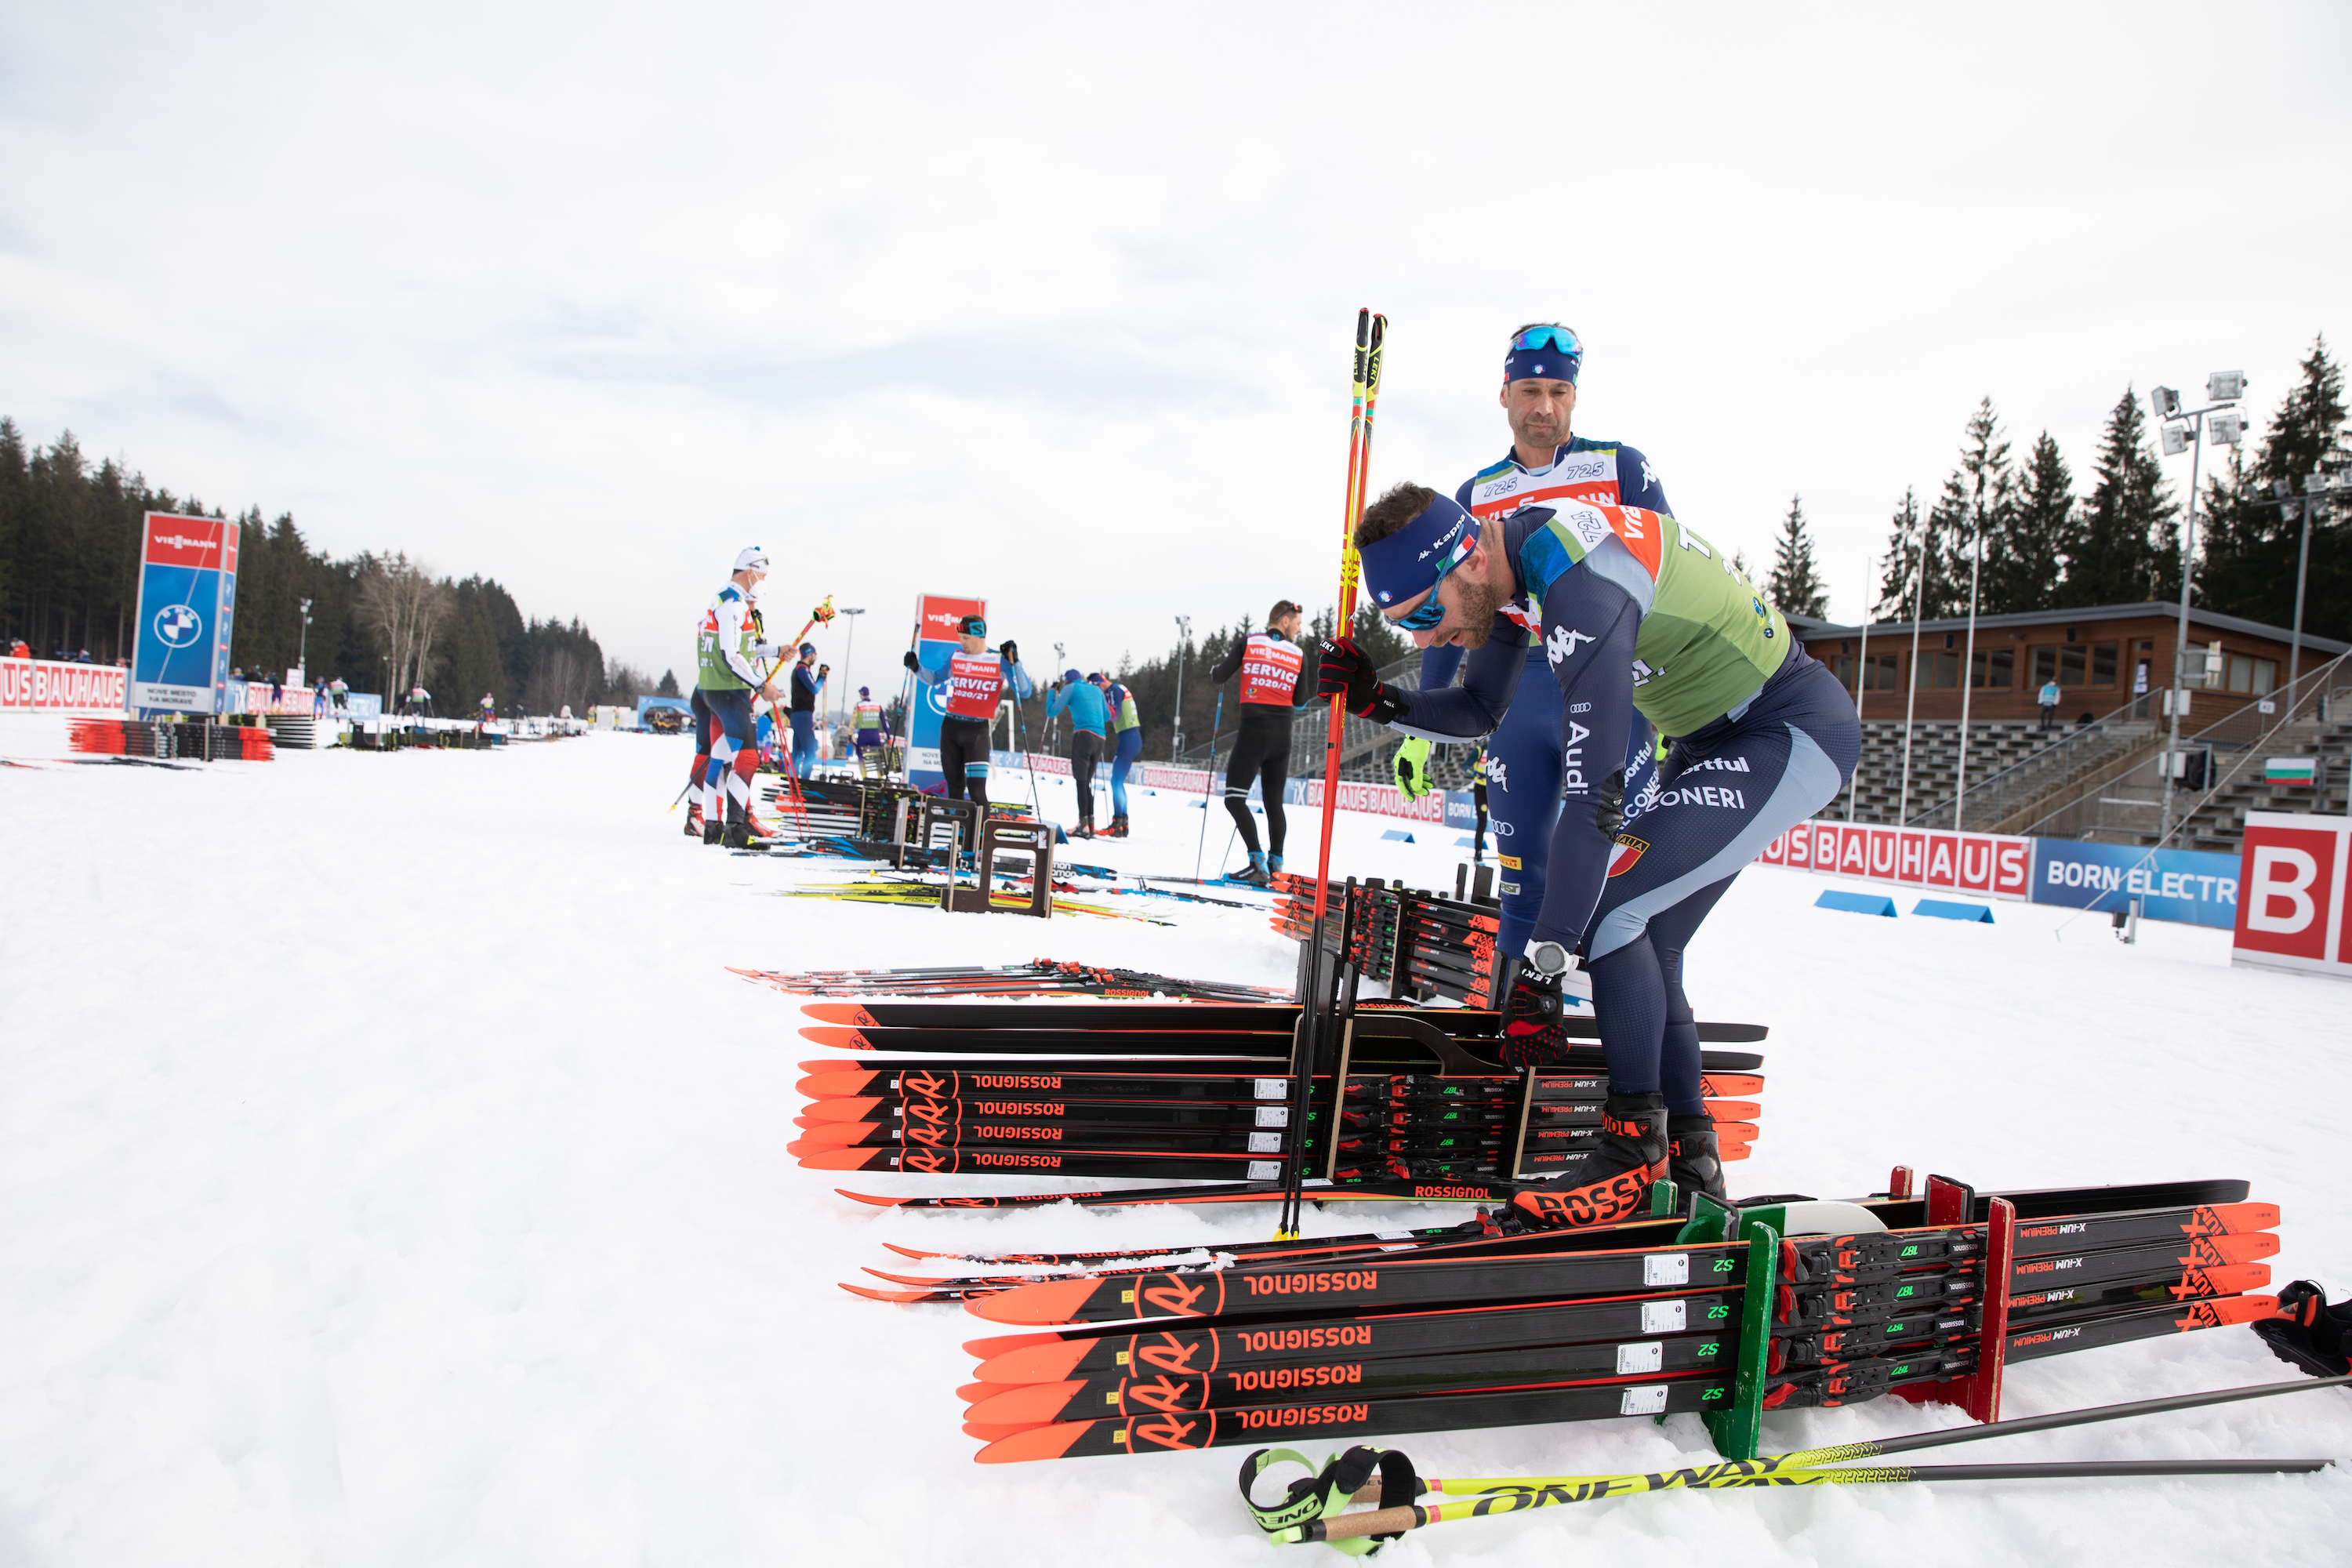 Ski - Comment réussir son fartage ? - Sports Infos - Ski - Biathlon